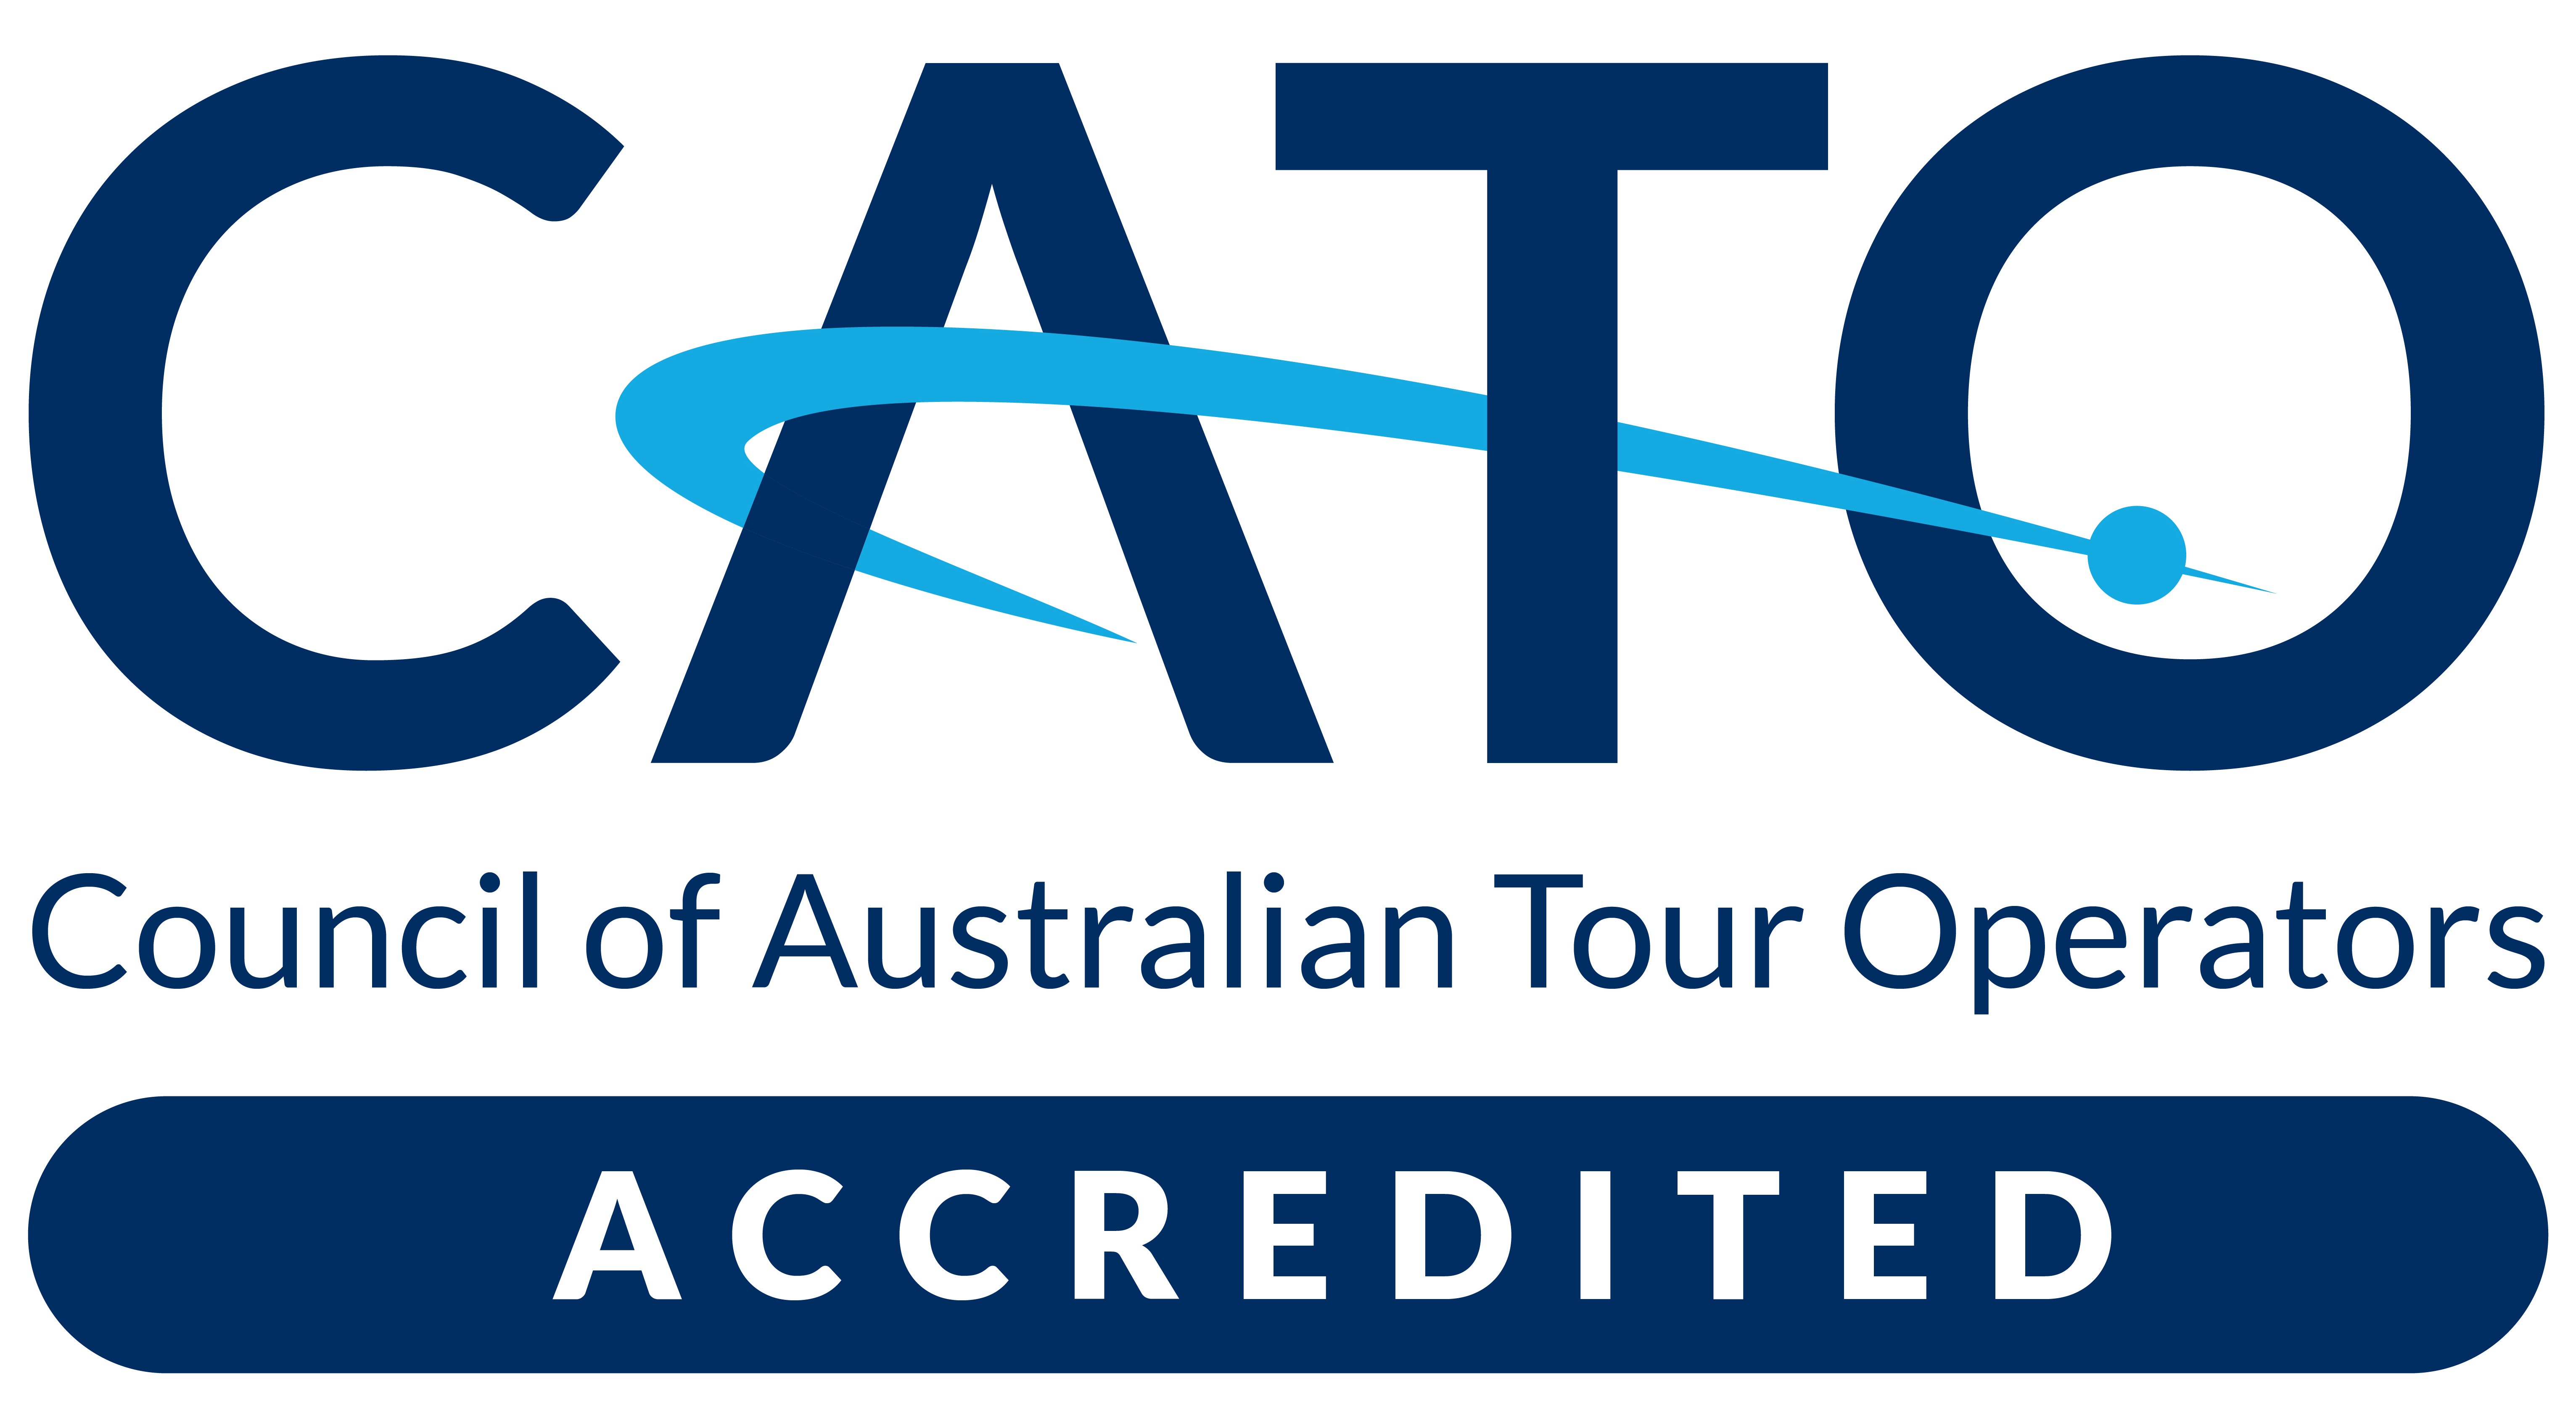 Member of Council of Australian Tour Operators (CATO)